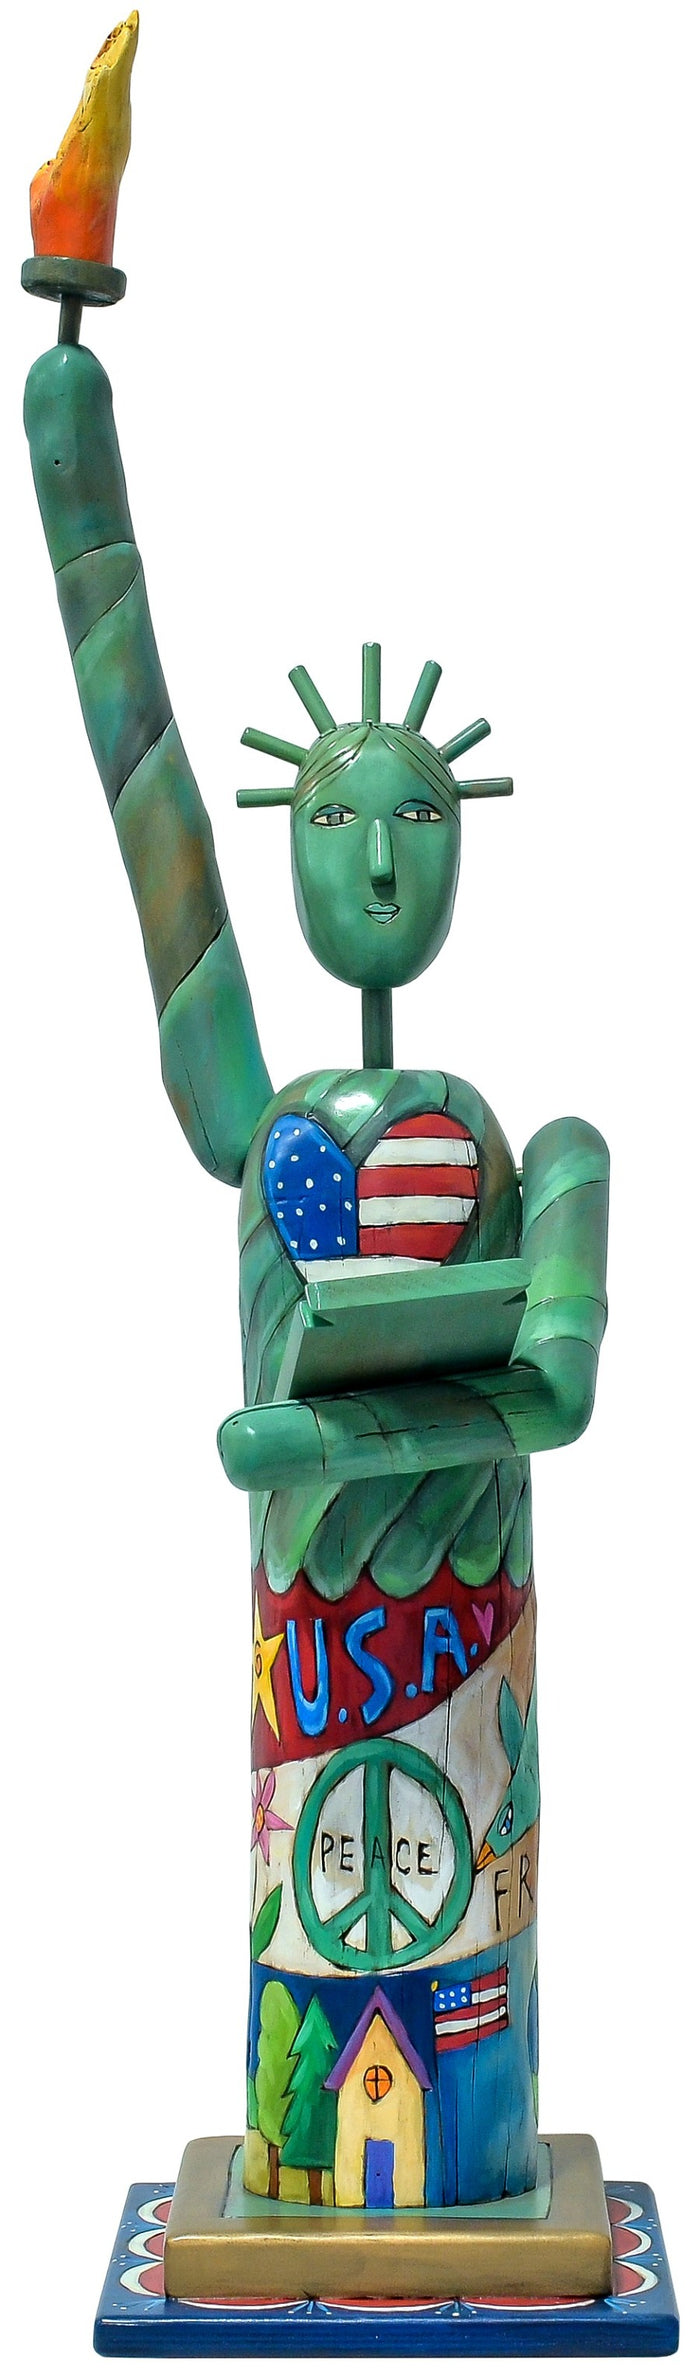 Medium Lady Liberty Sculpture